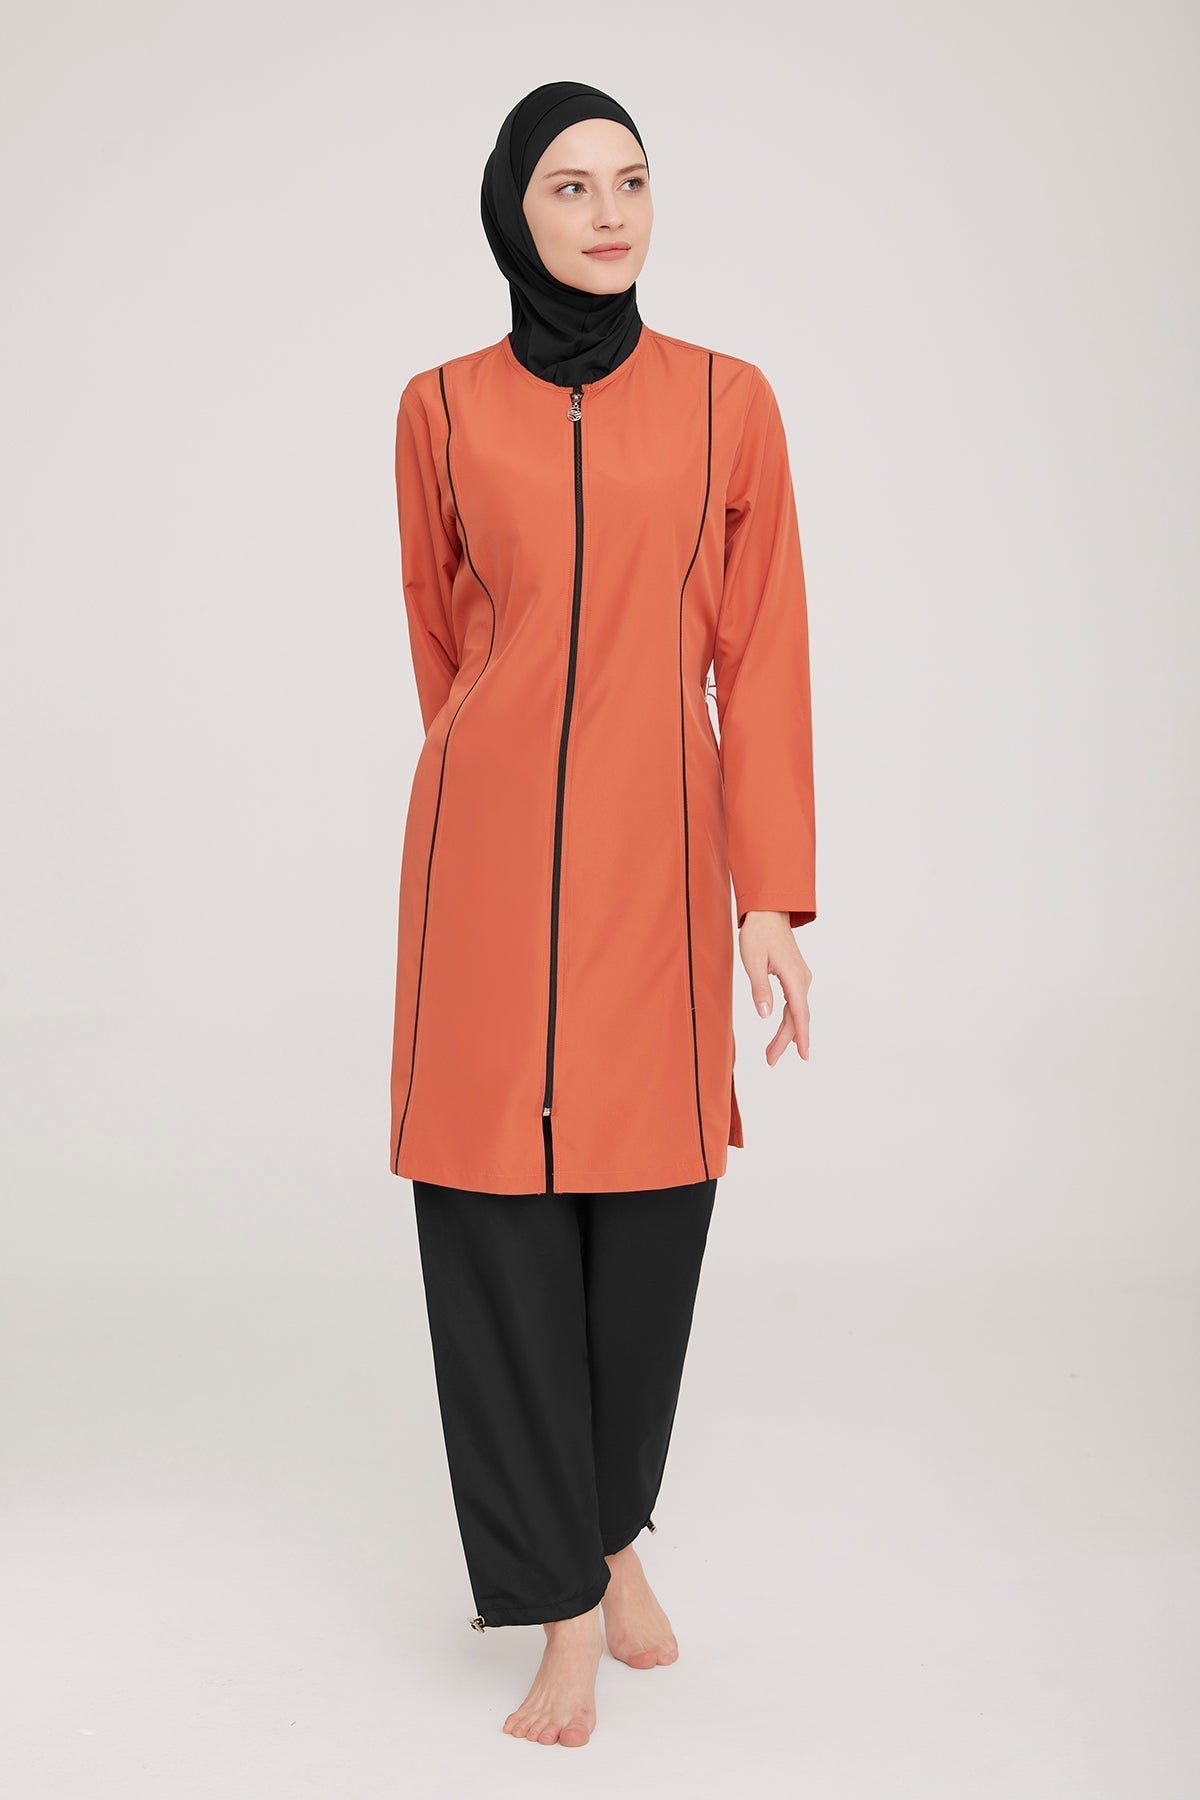 Rozamay Burkini Swimsuit-9075 Voile Fashion